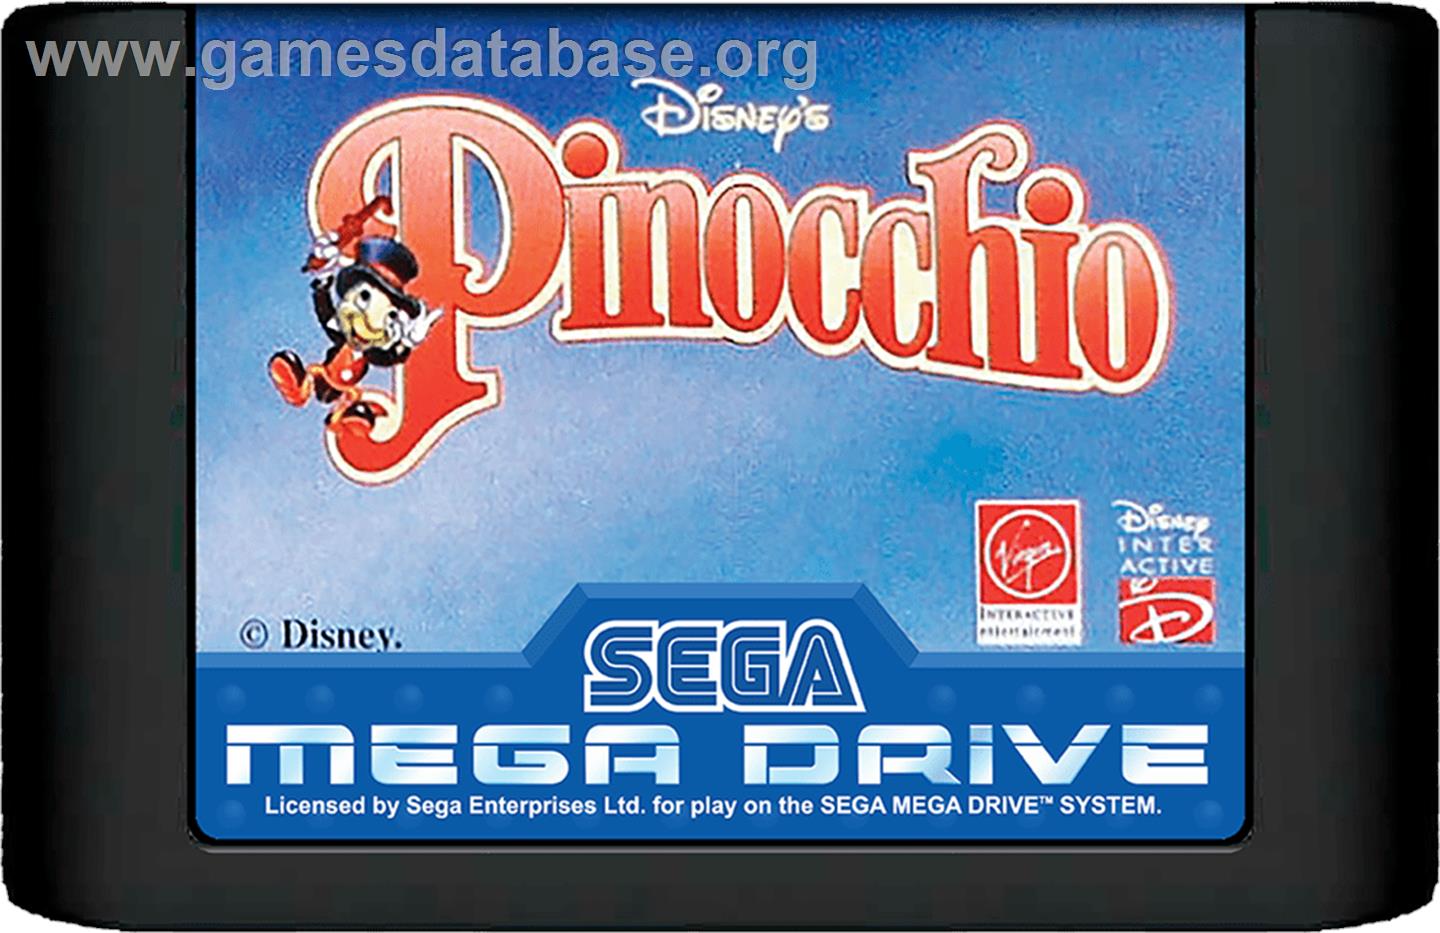 Pinocchio - Sega Genesis - Artwork - Cartridge